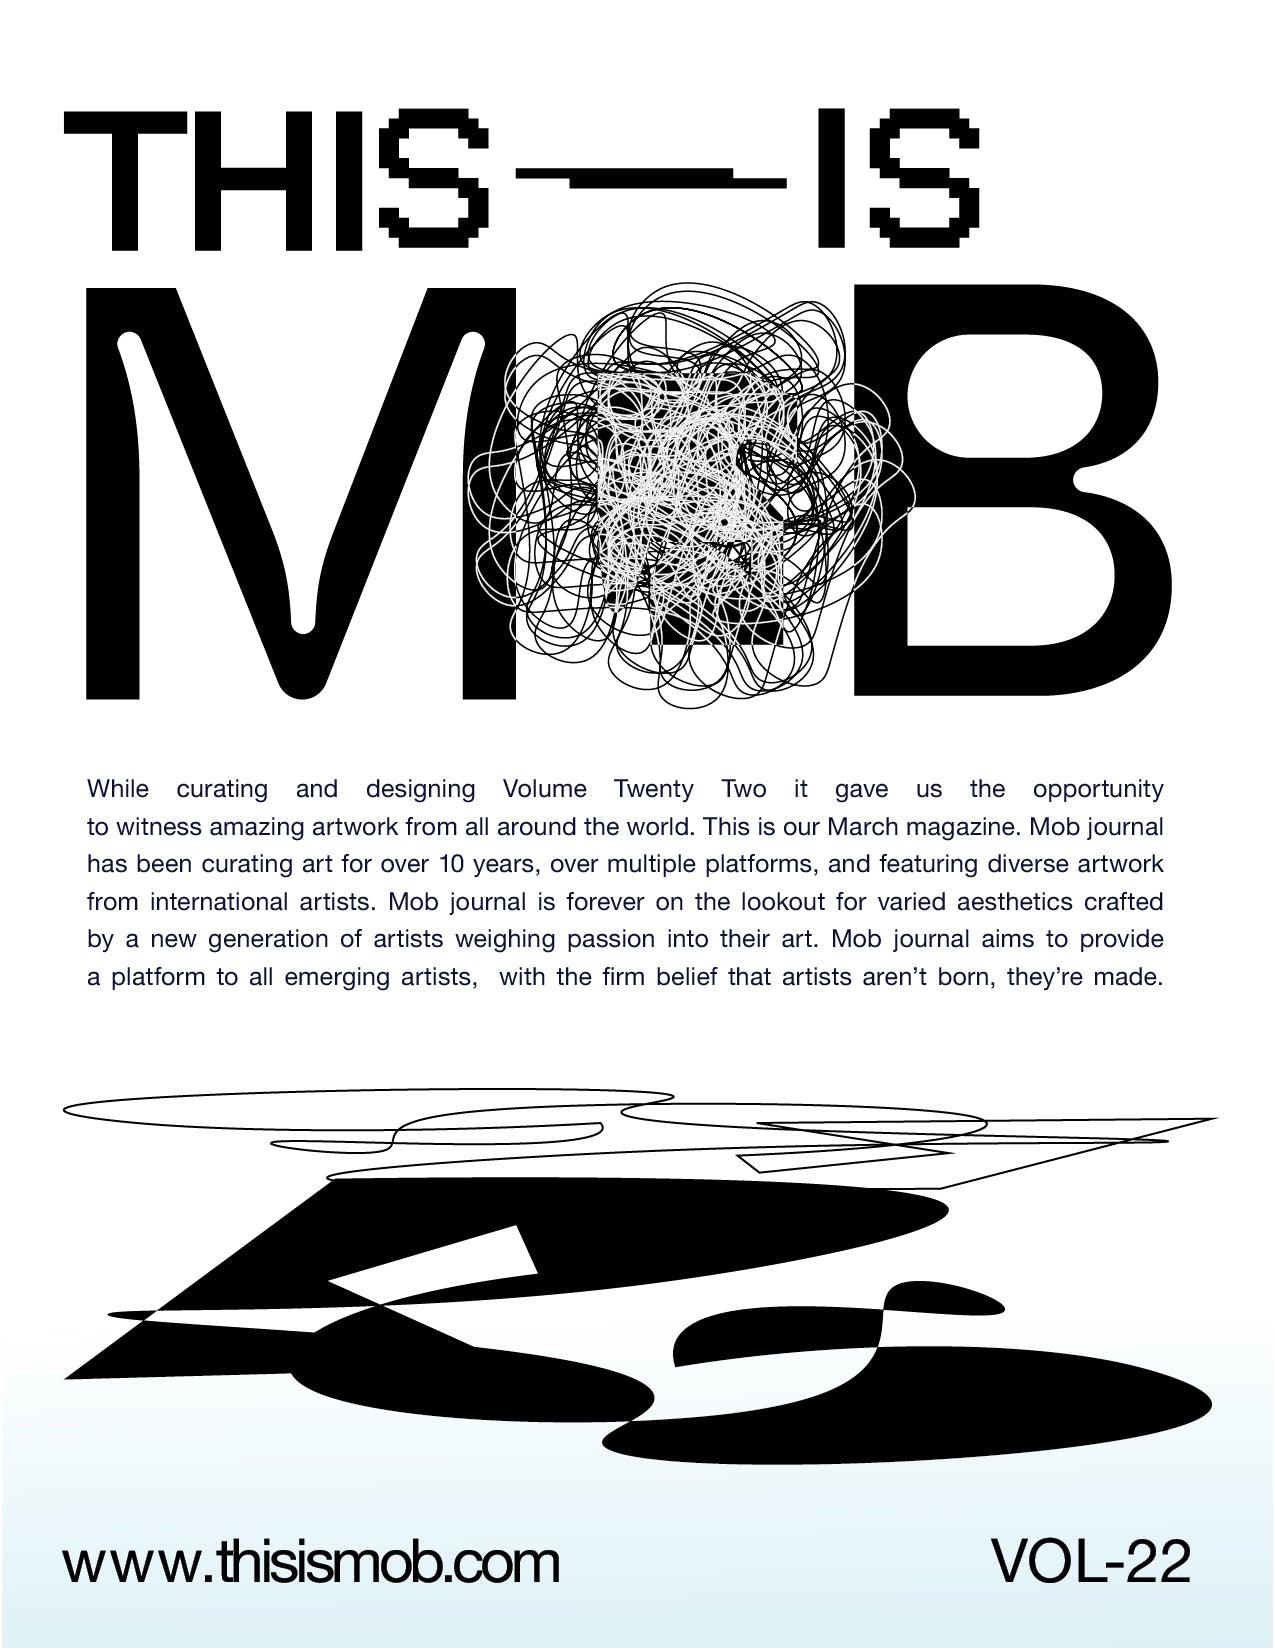 MOB JOURNAL | VOLUME TWENTY TWO | ISSUE #52 - Mob Journal